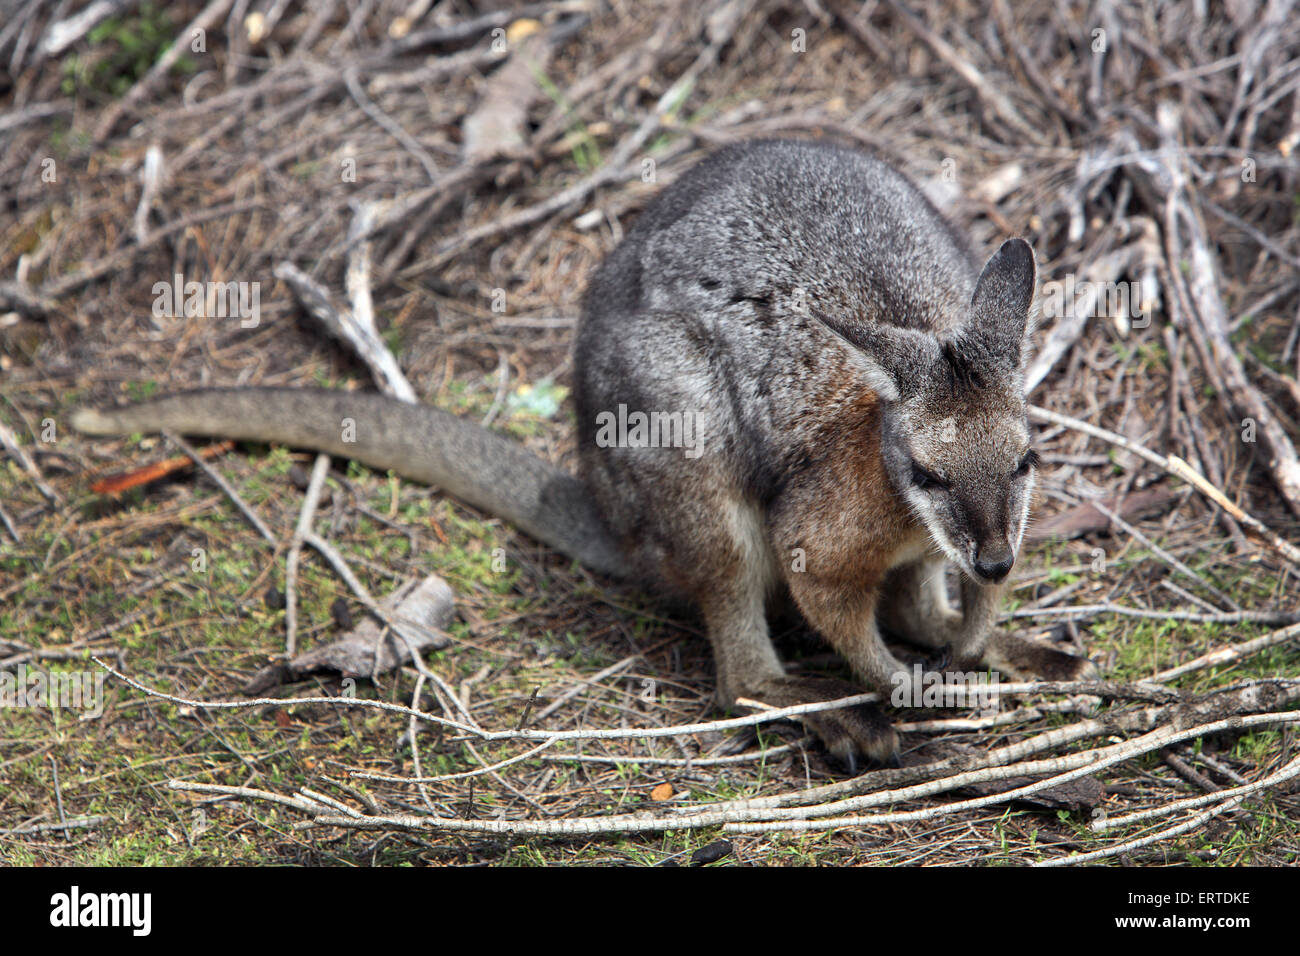 Wallaby. Flinders Chase National Park, Kangaroo Island, South Australia. Stock Photo